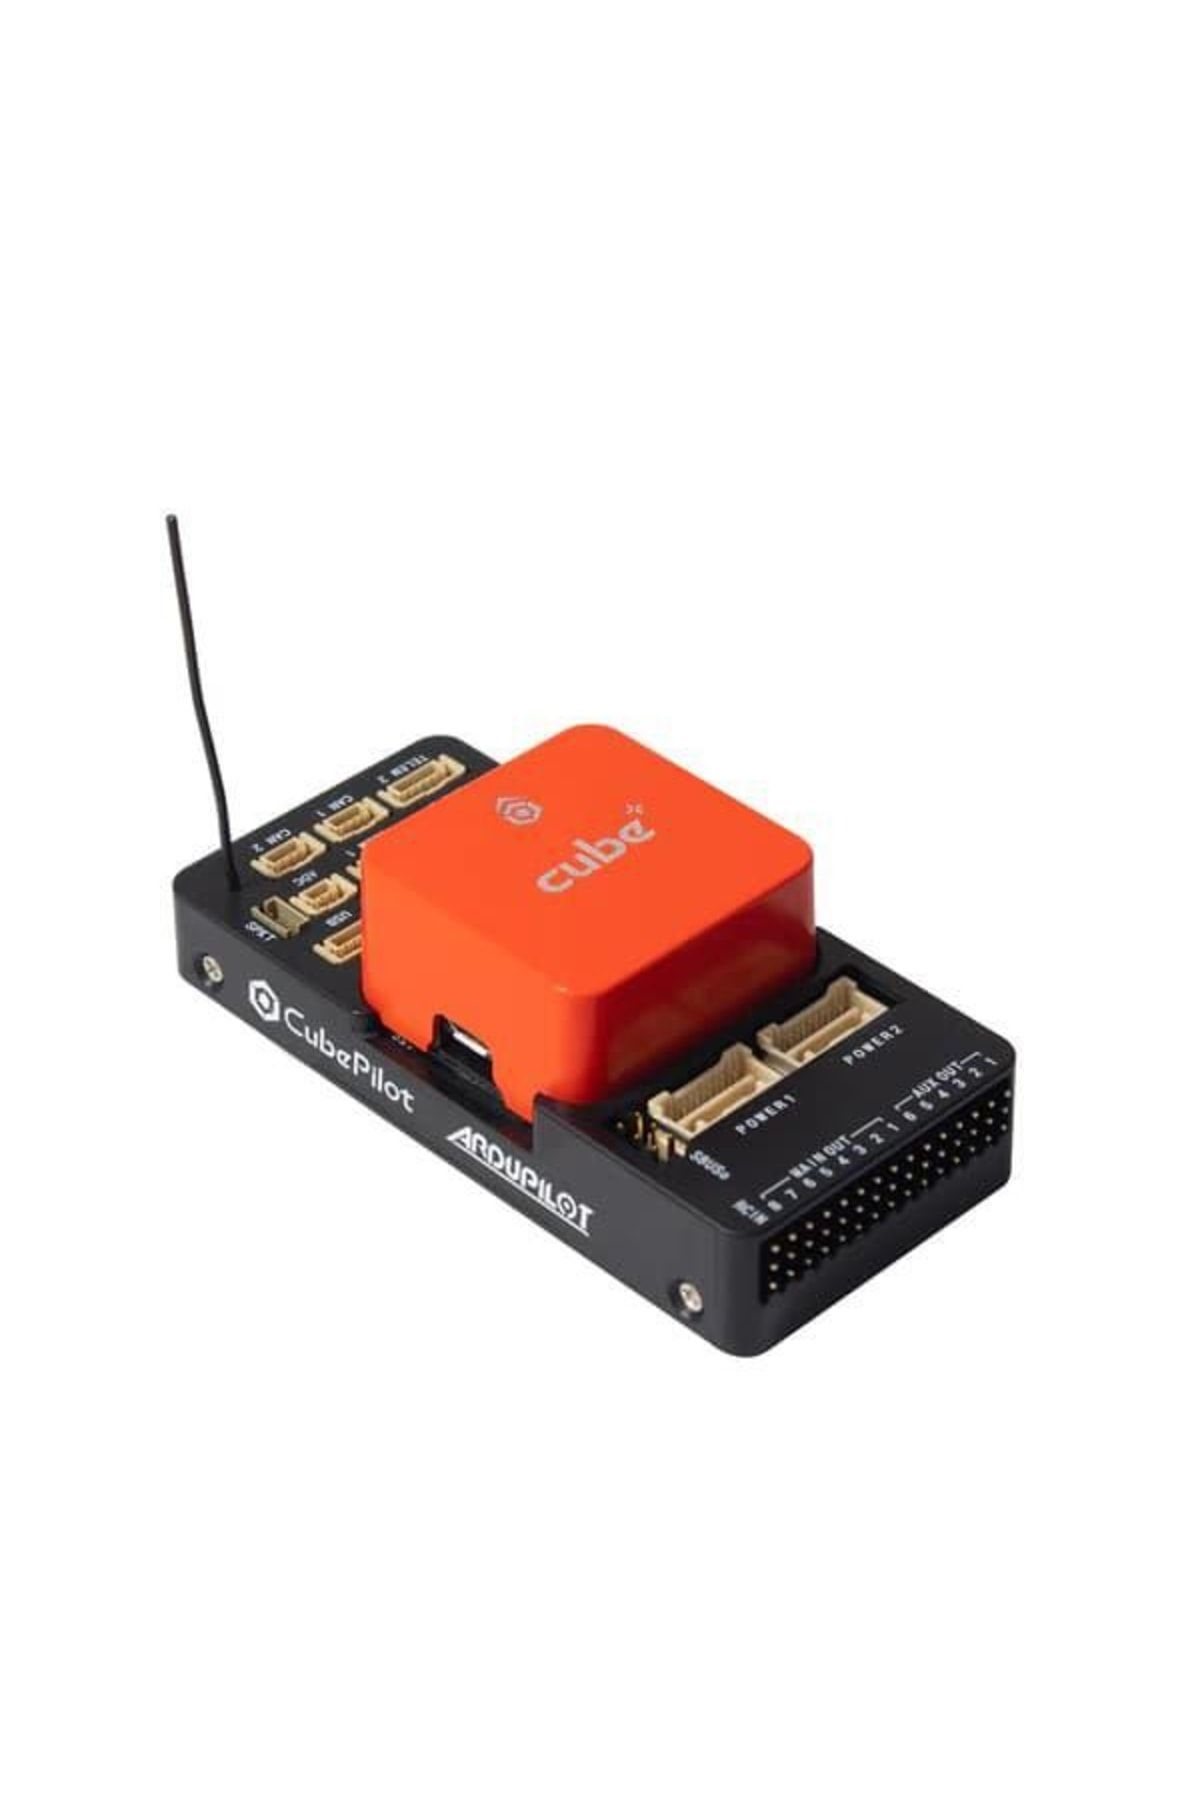 Pixhawk The Cube Orange+ (ımu V8) Standard Set Otopilot Sistemi (ads-b Carrier Board) - Distribütör